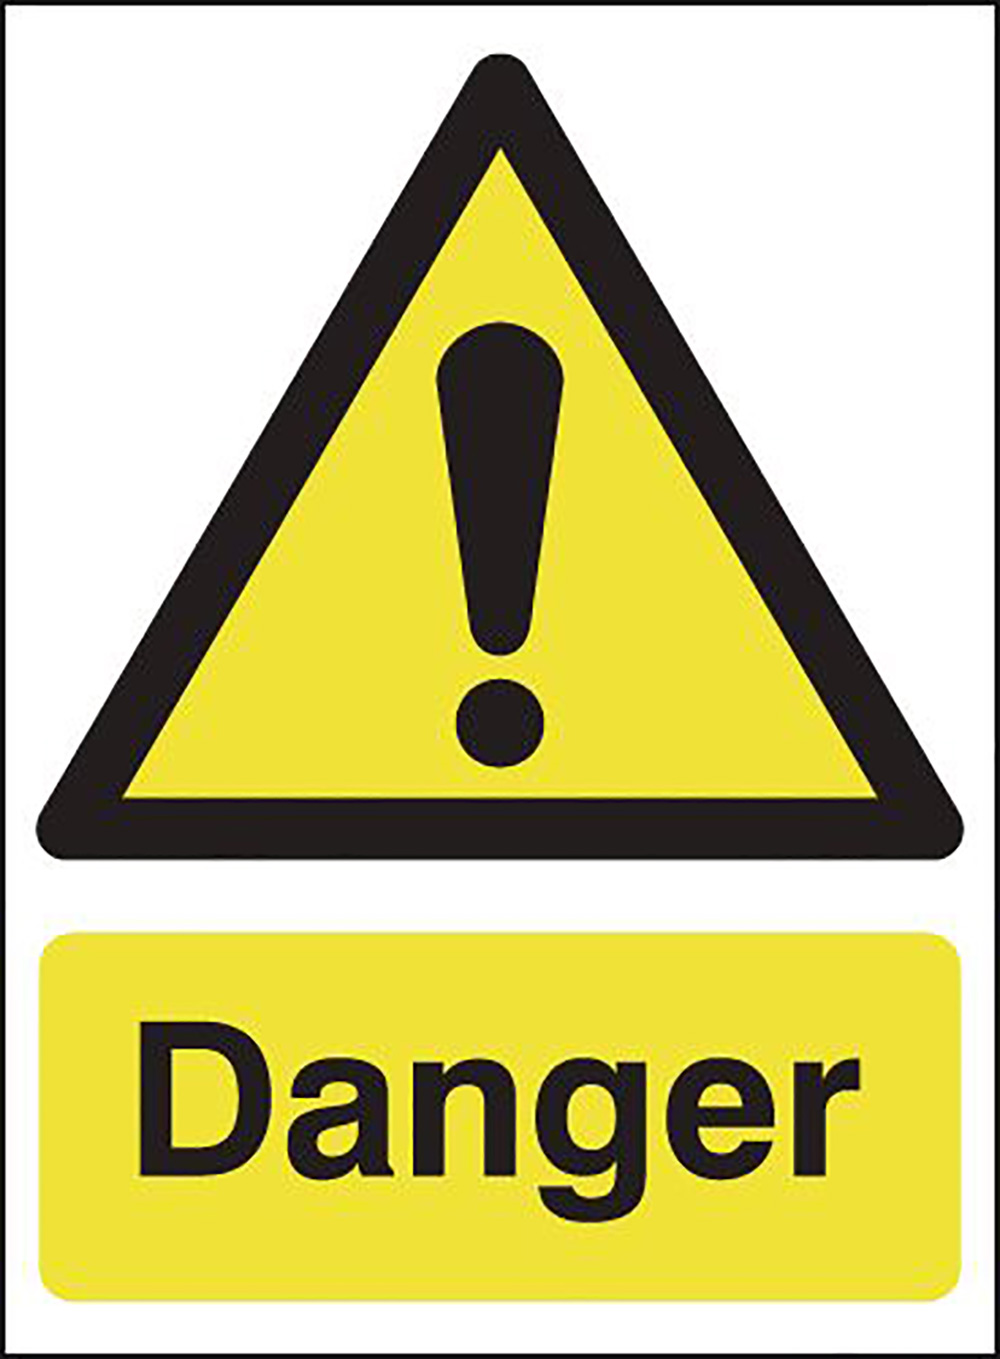 Danger 297x210mm 1.2mm Rigid Plastic Safety Sign  